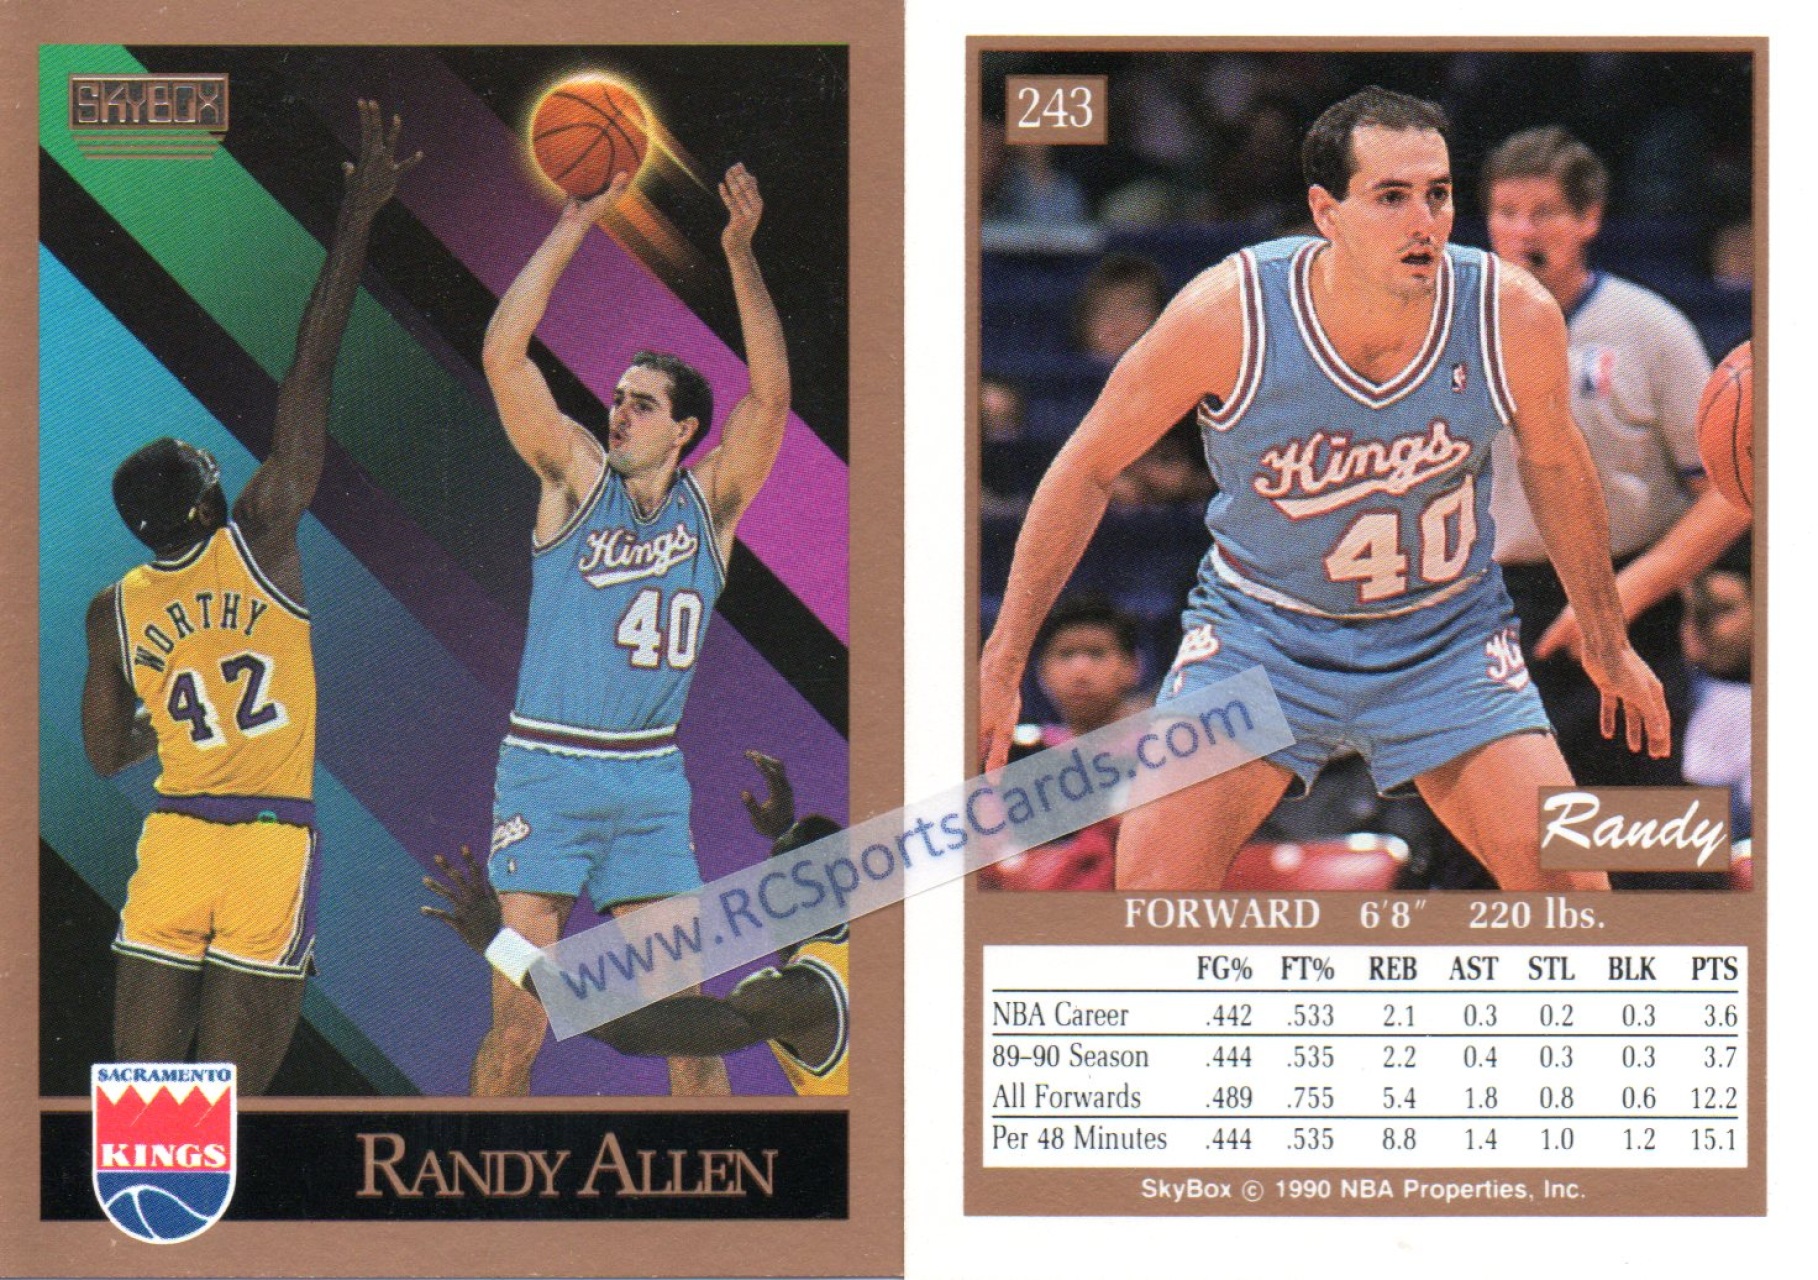  1989-90 Hoops Basketball #215 Danny Ainge Sacramento Kings  Official NBA Trading Card : Collectibles & Fine Art